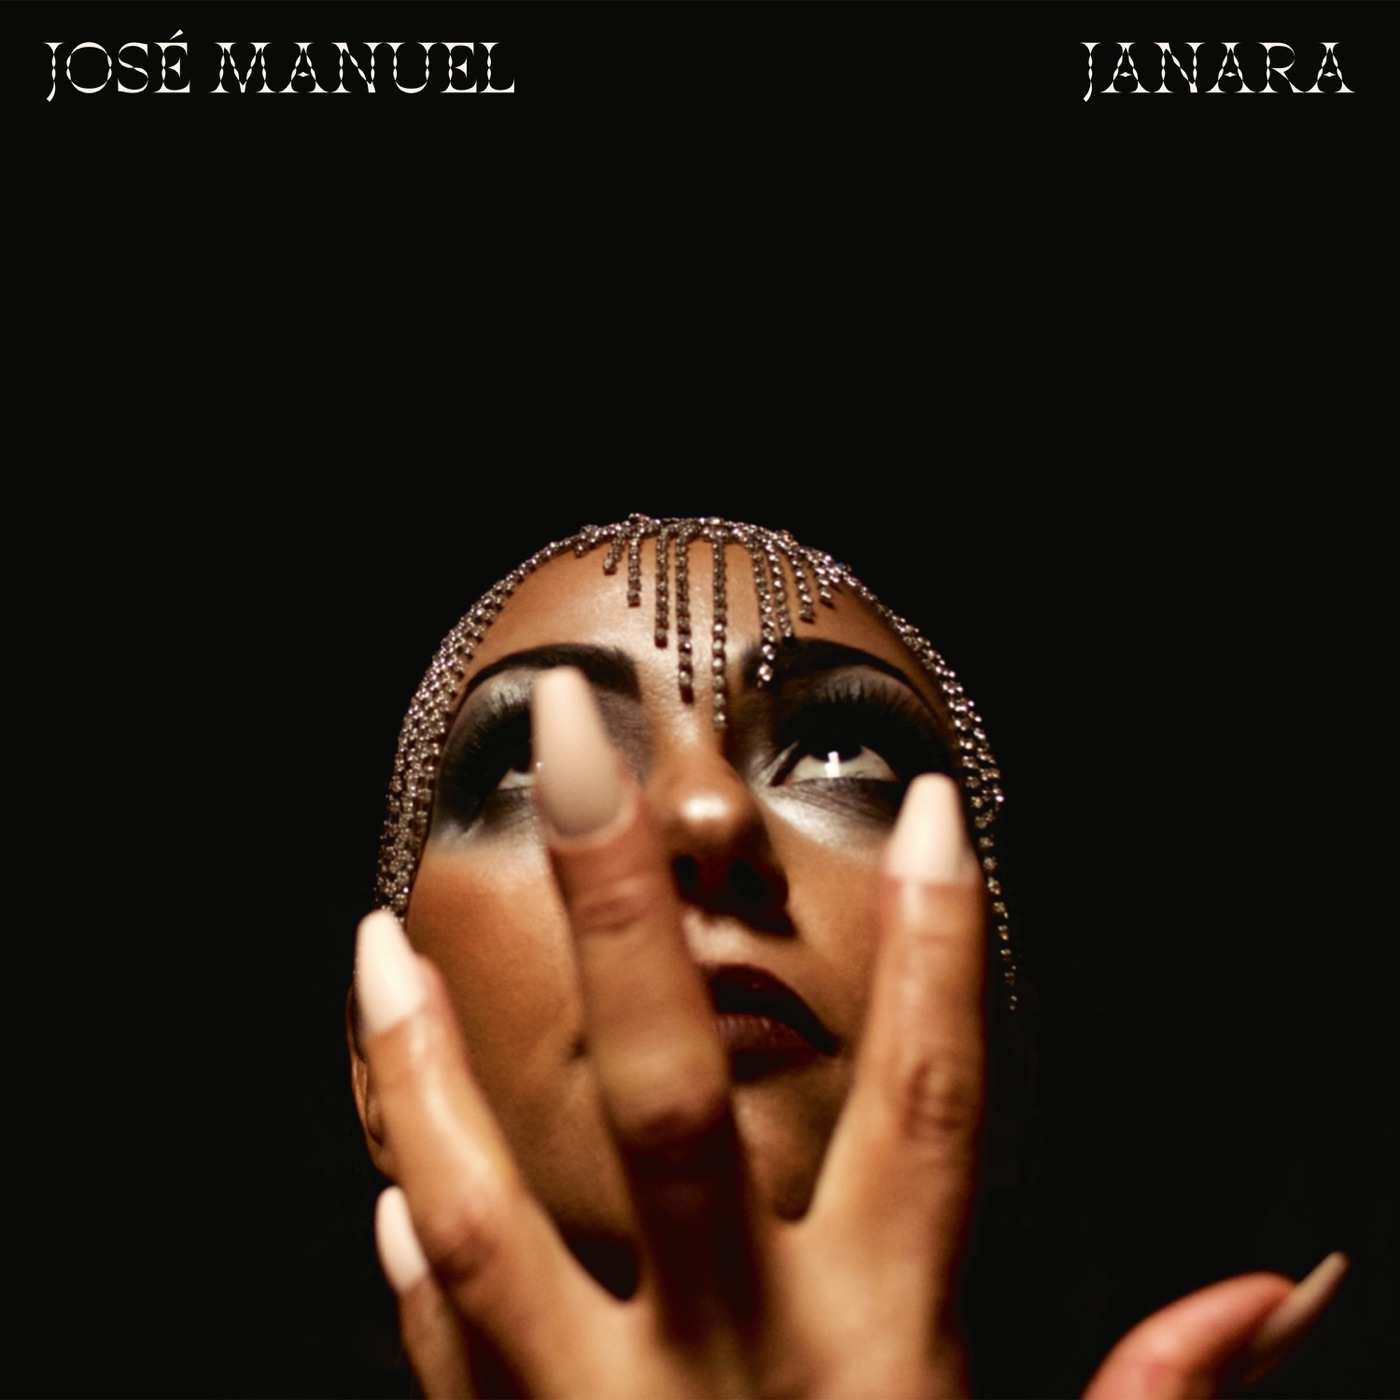 Janara by Jose Manuel